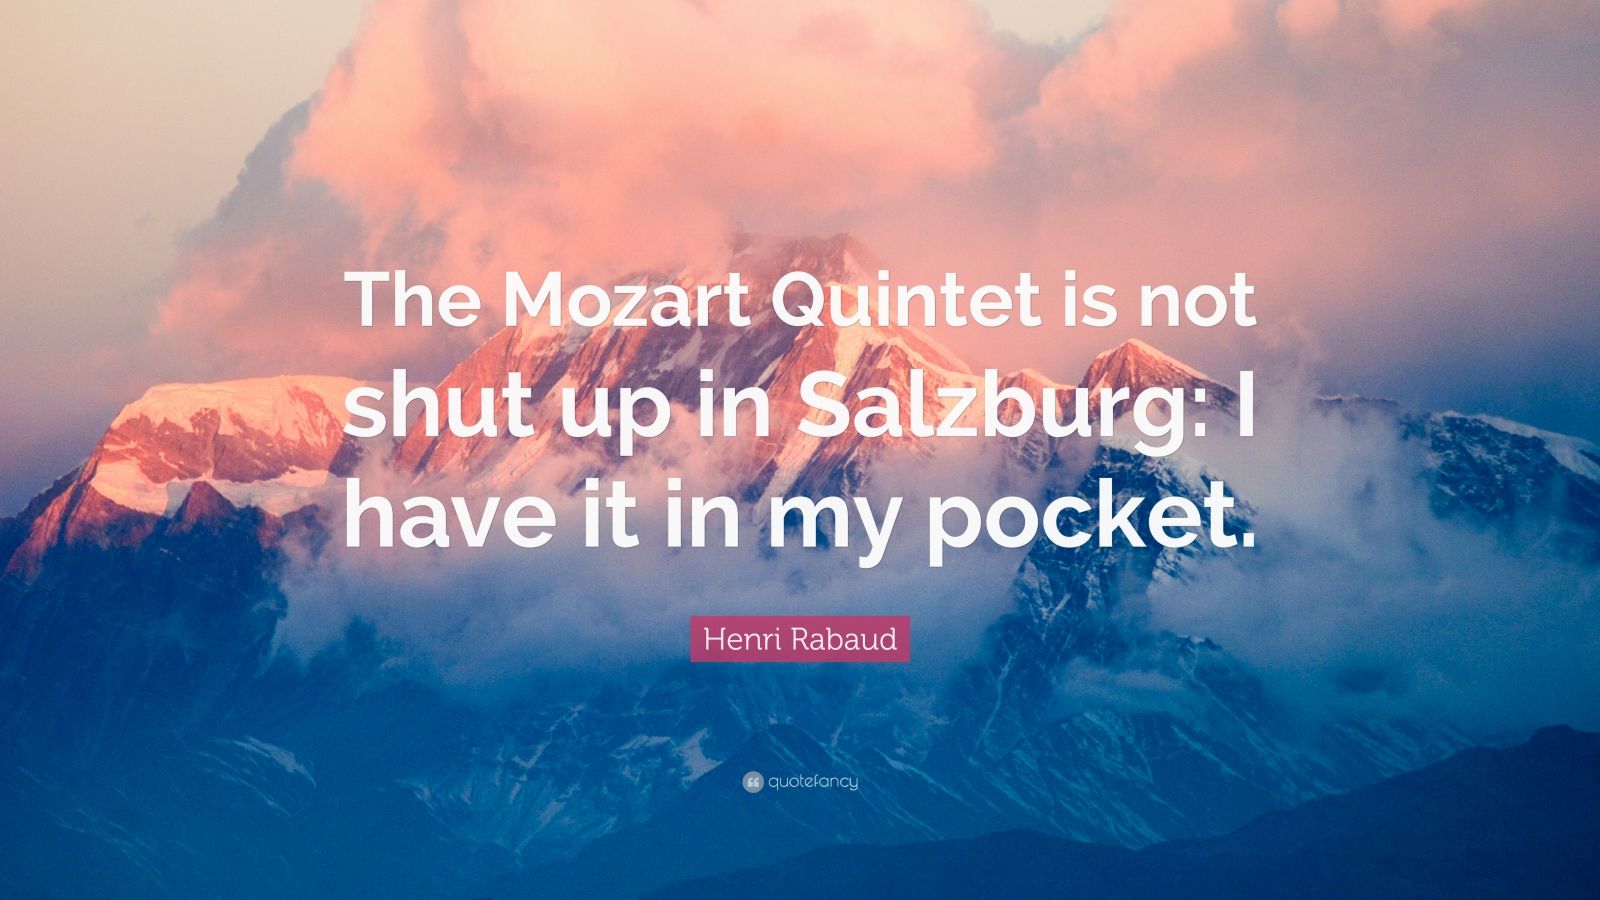 Henri Rabaud Quote: “The Mozart Quintet is not shut up in Salzburg: I ...